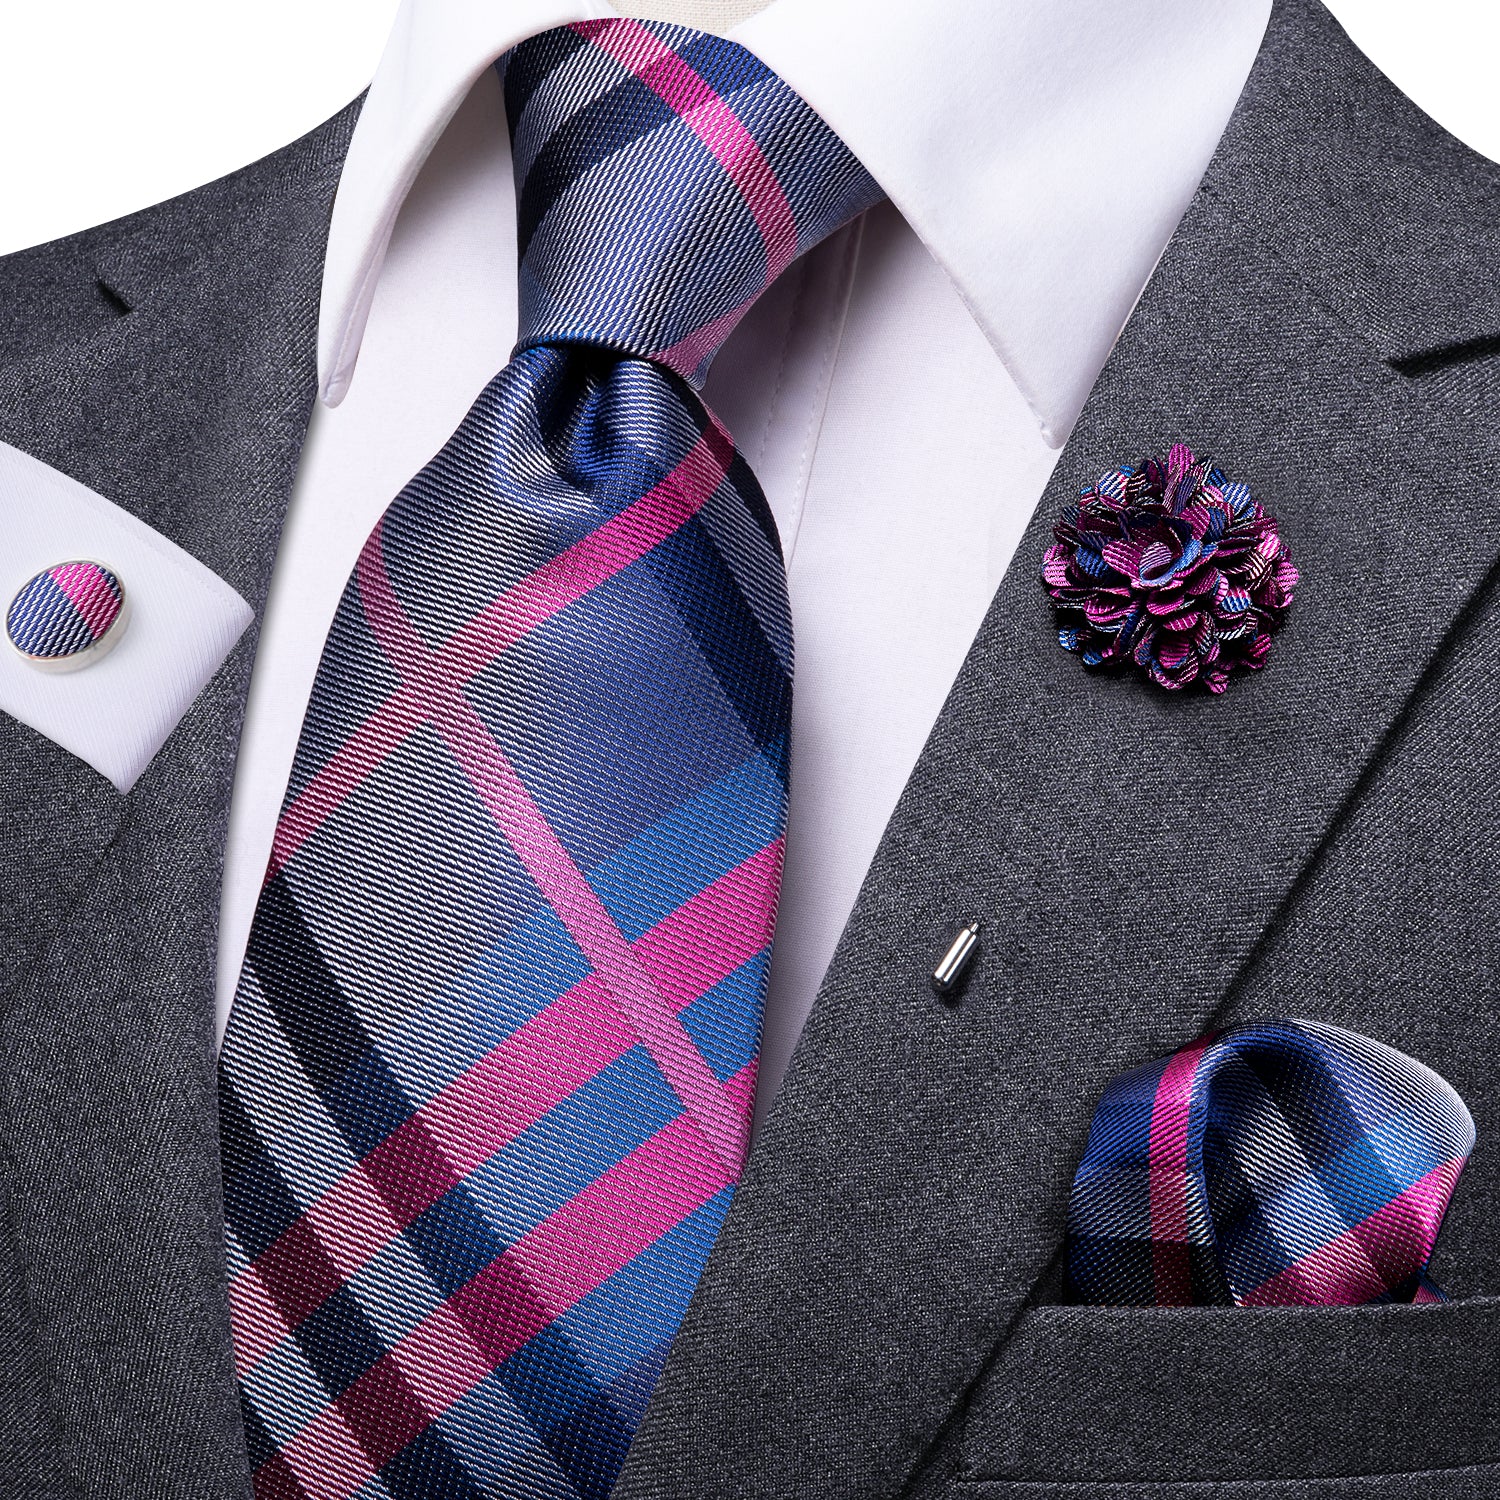 Pink Blue Grey Plaid Tie Pocket Square Cufflinks Set with Brooch